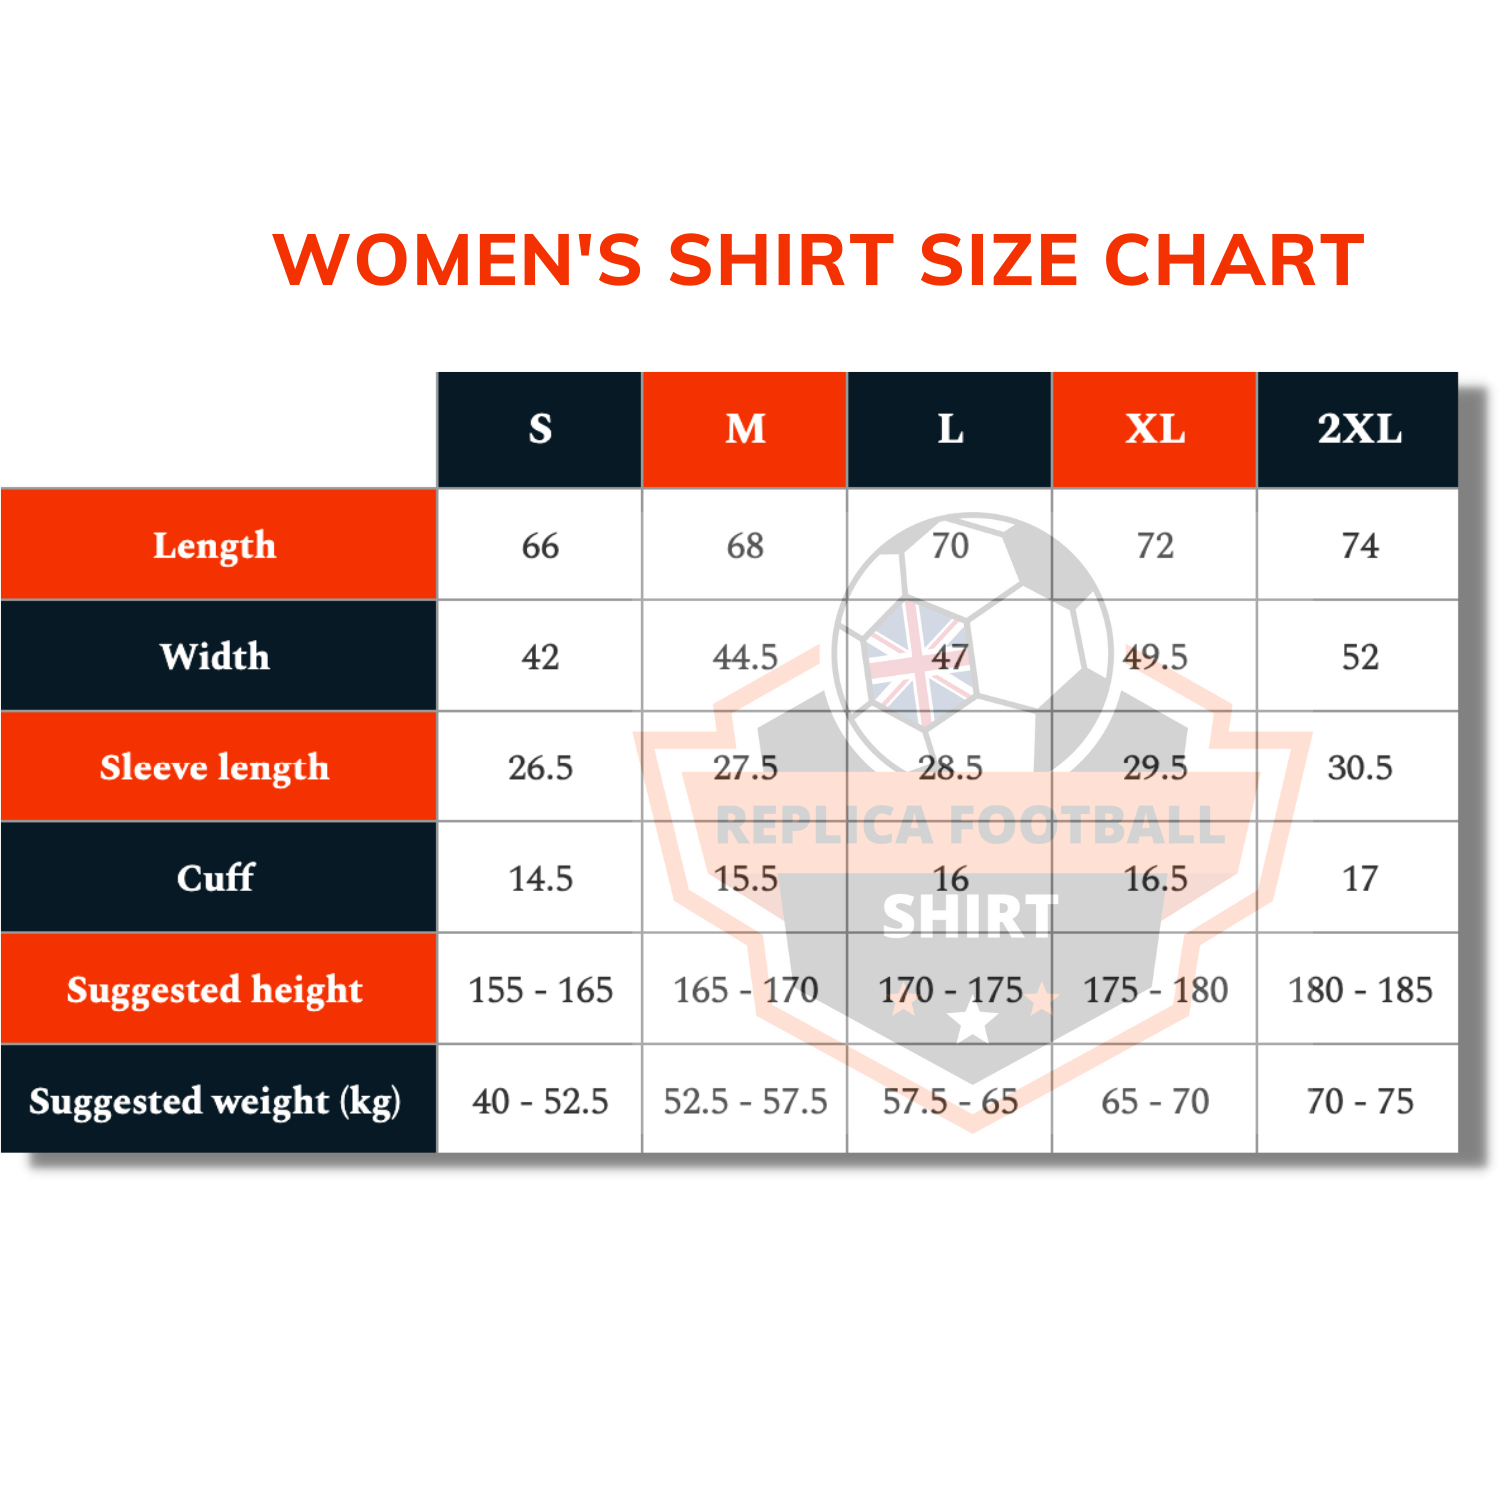 Women's Shirt Size Chart